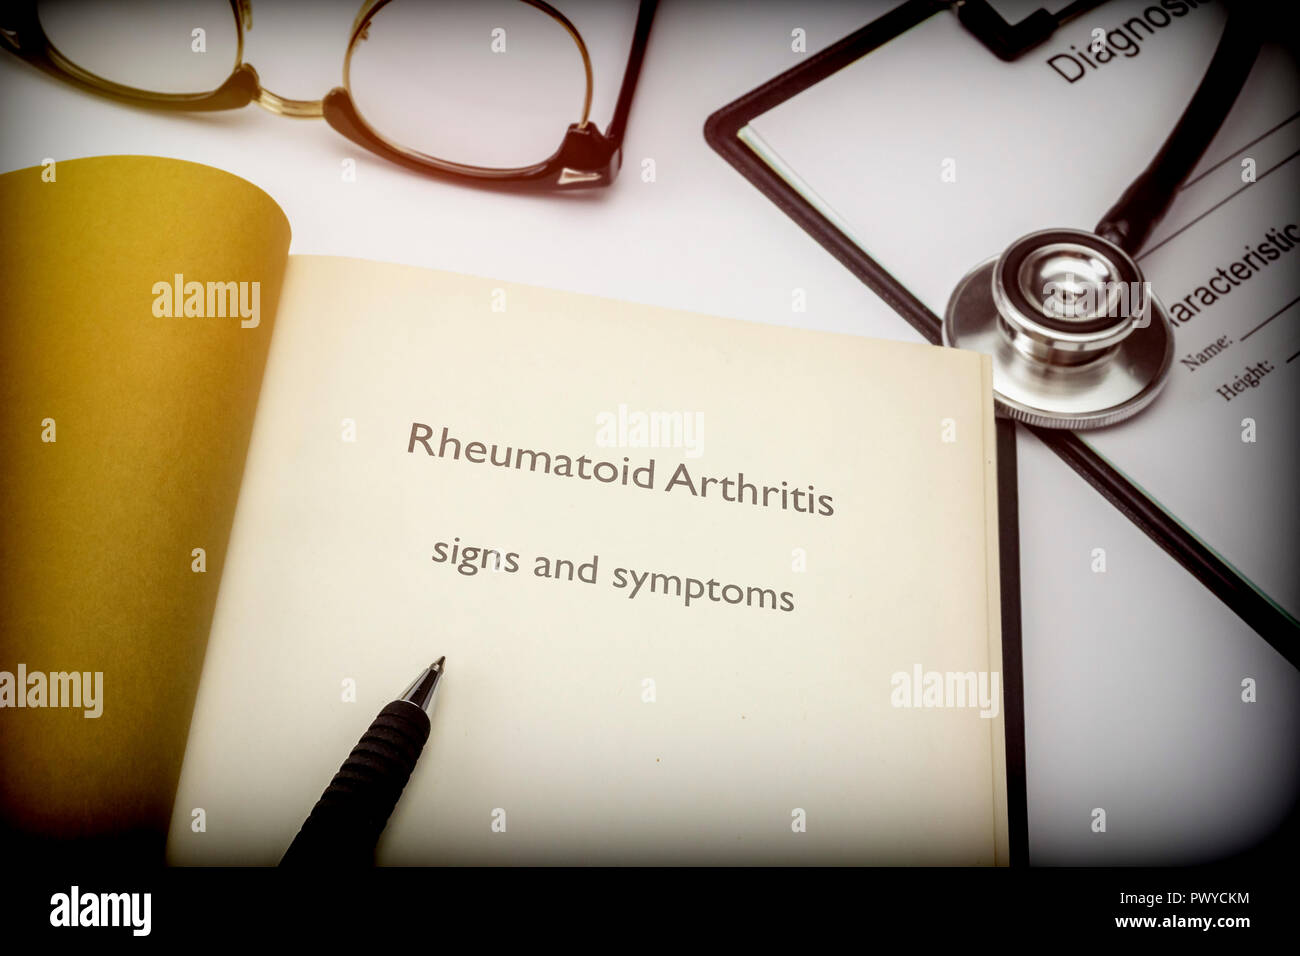 Titled book Rheumatoid Arthritis along with medical equipment, conceptual image Stock Photo